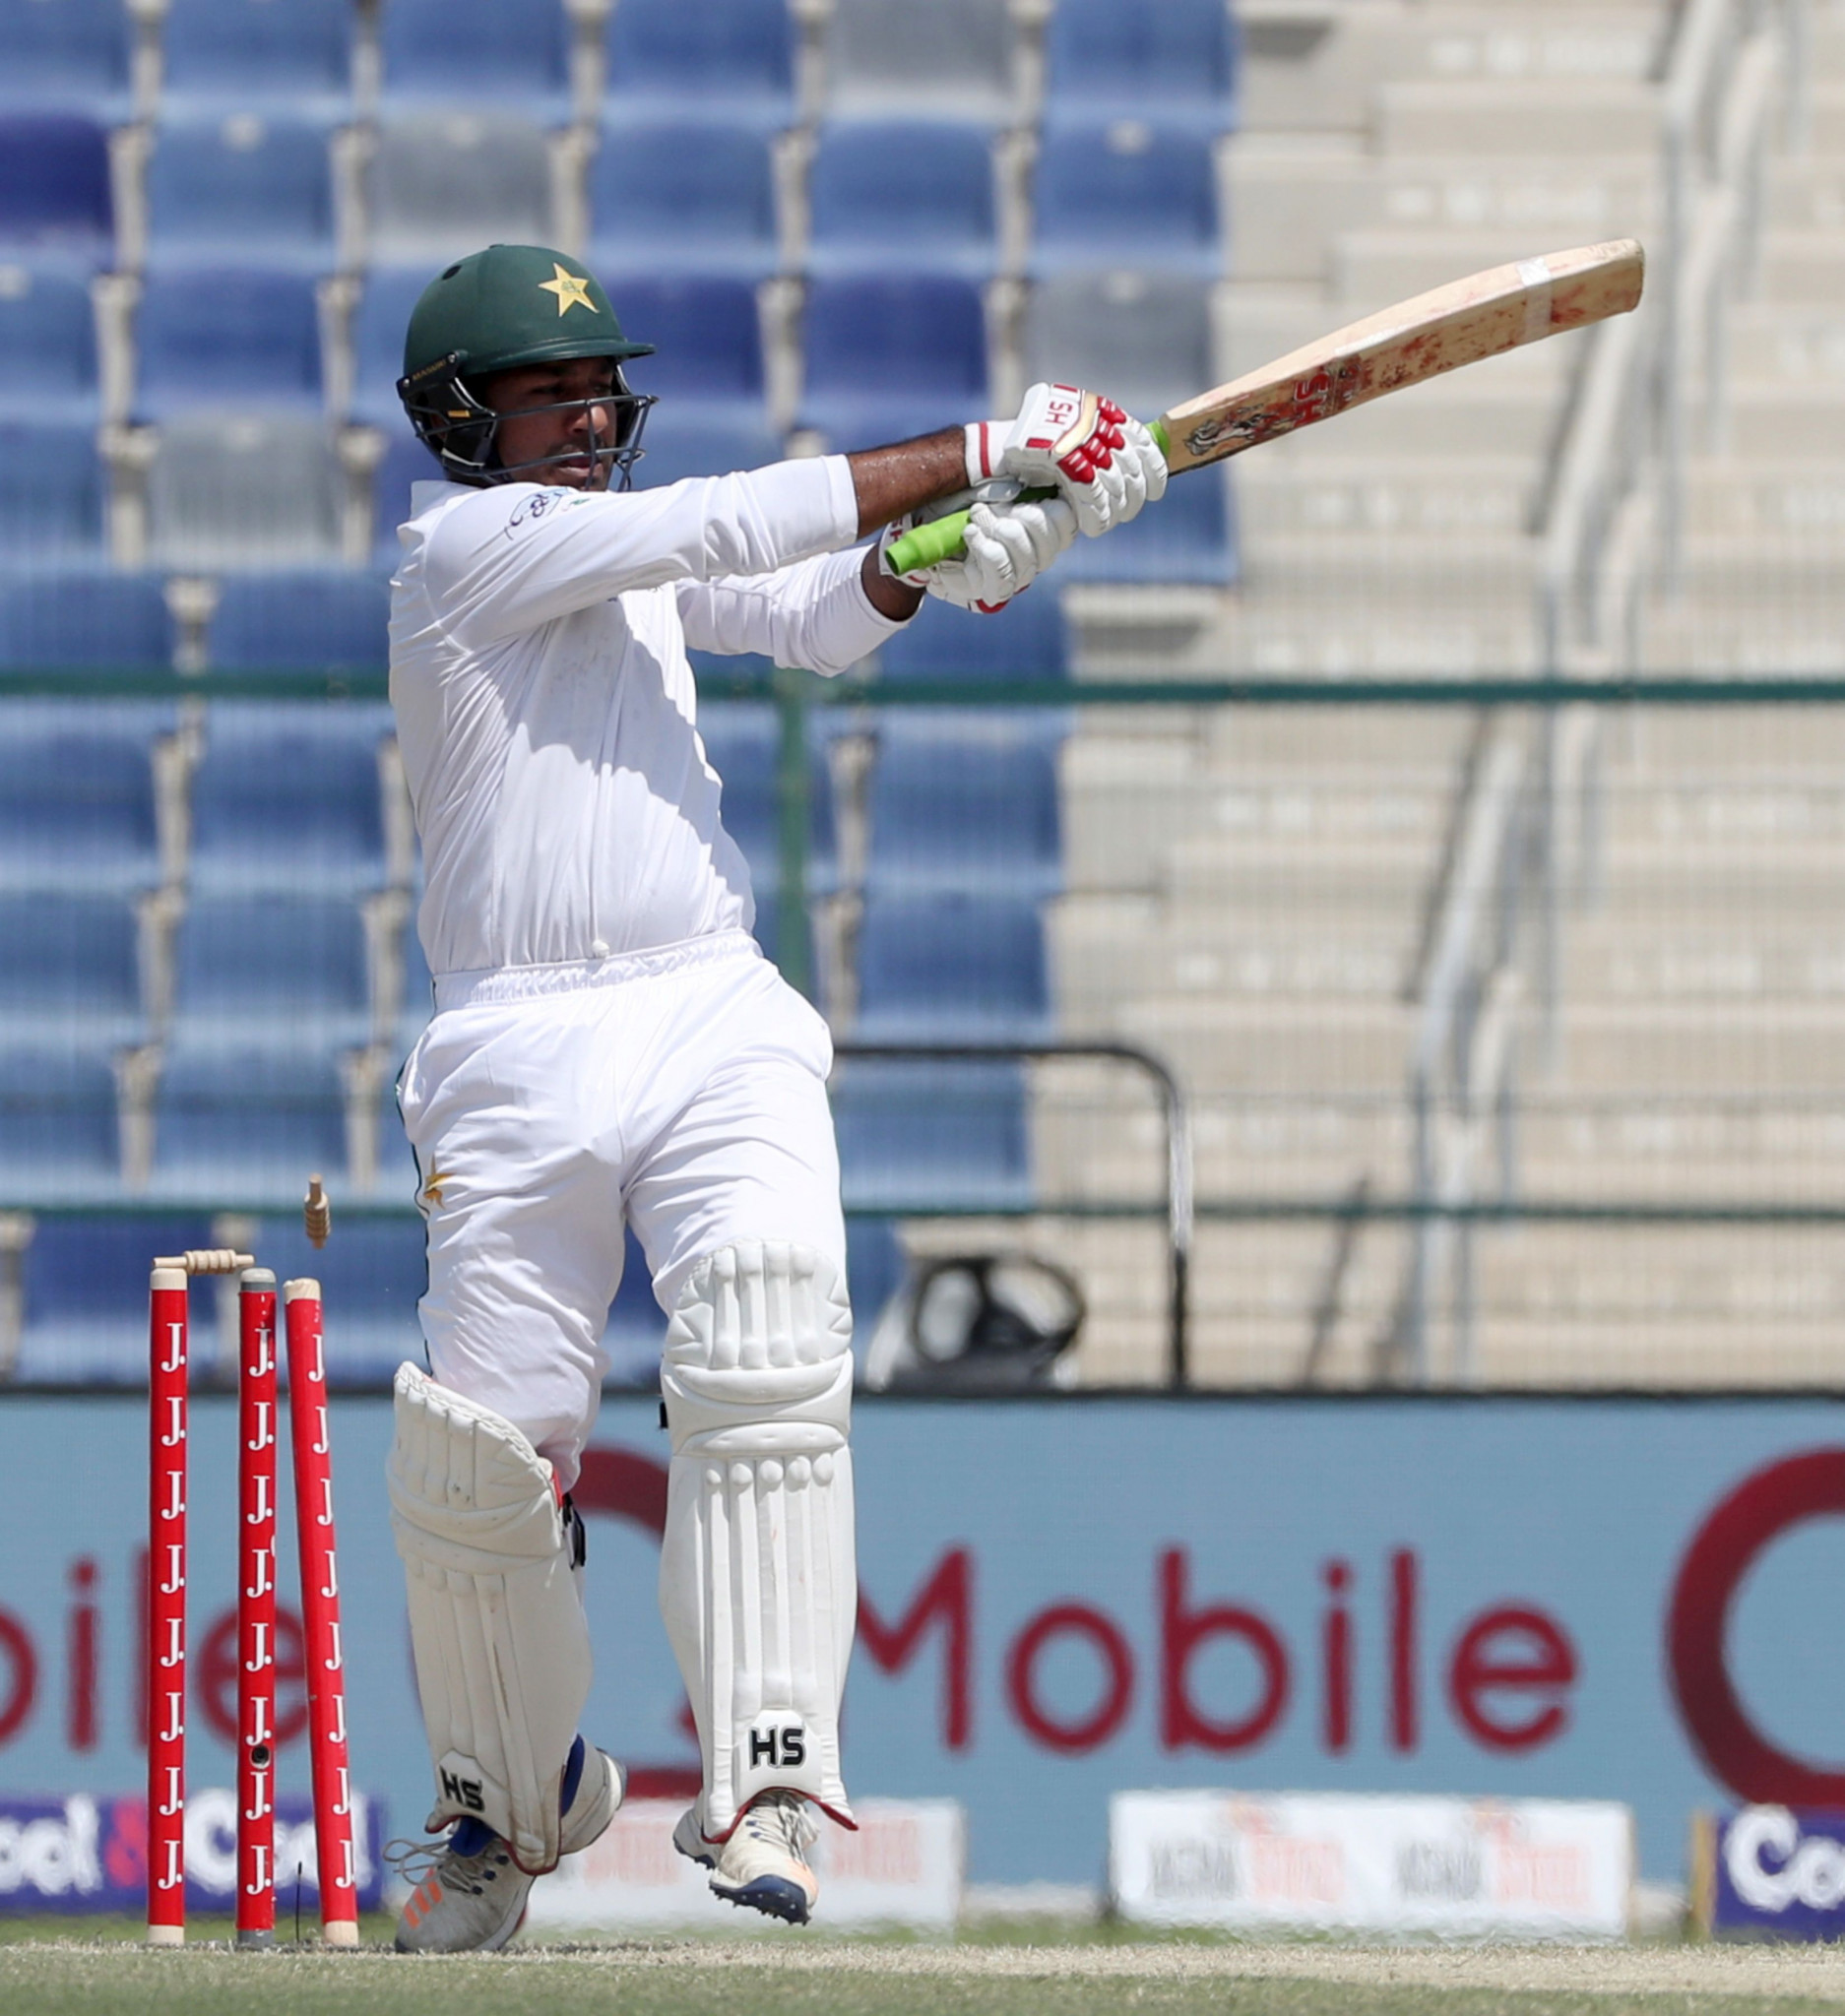 Pakistan cricket captain reports spot-fixing approach